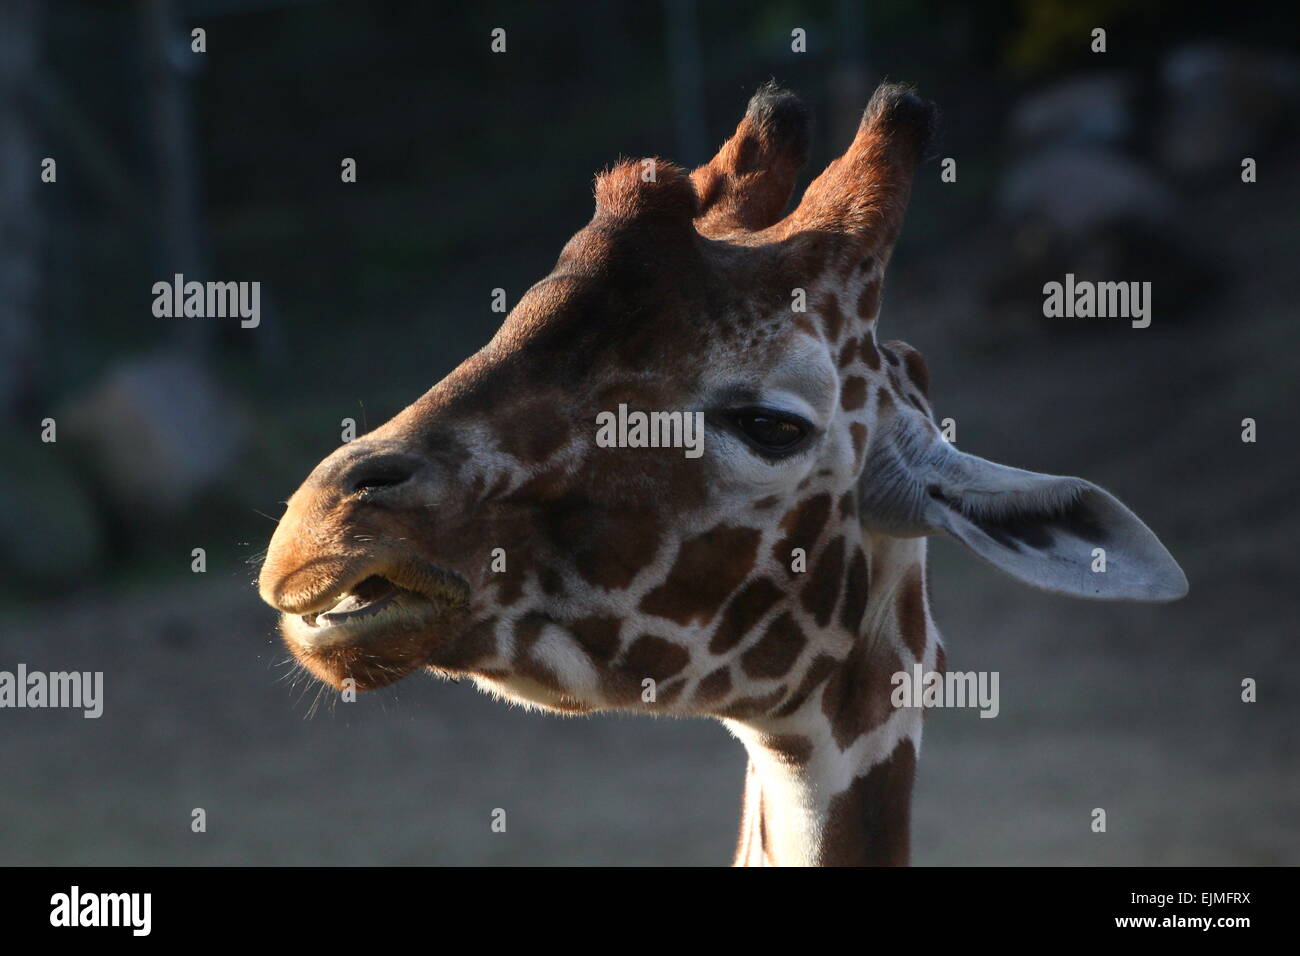 Closeup of the head of a Reticulated or Somali giraffe (Giraffa camelopardalis reticulata) Stock Photo